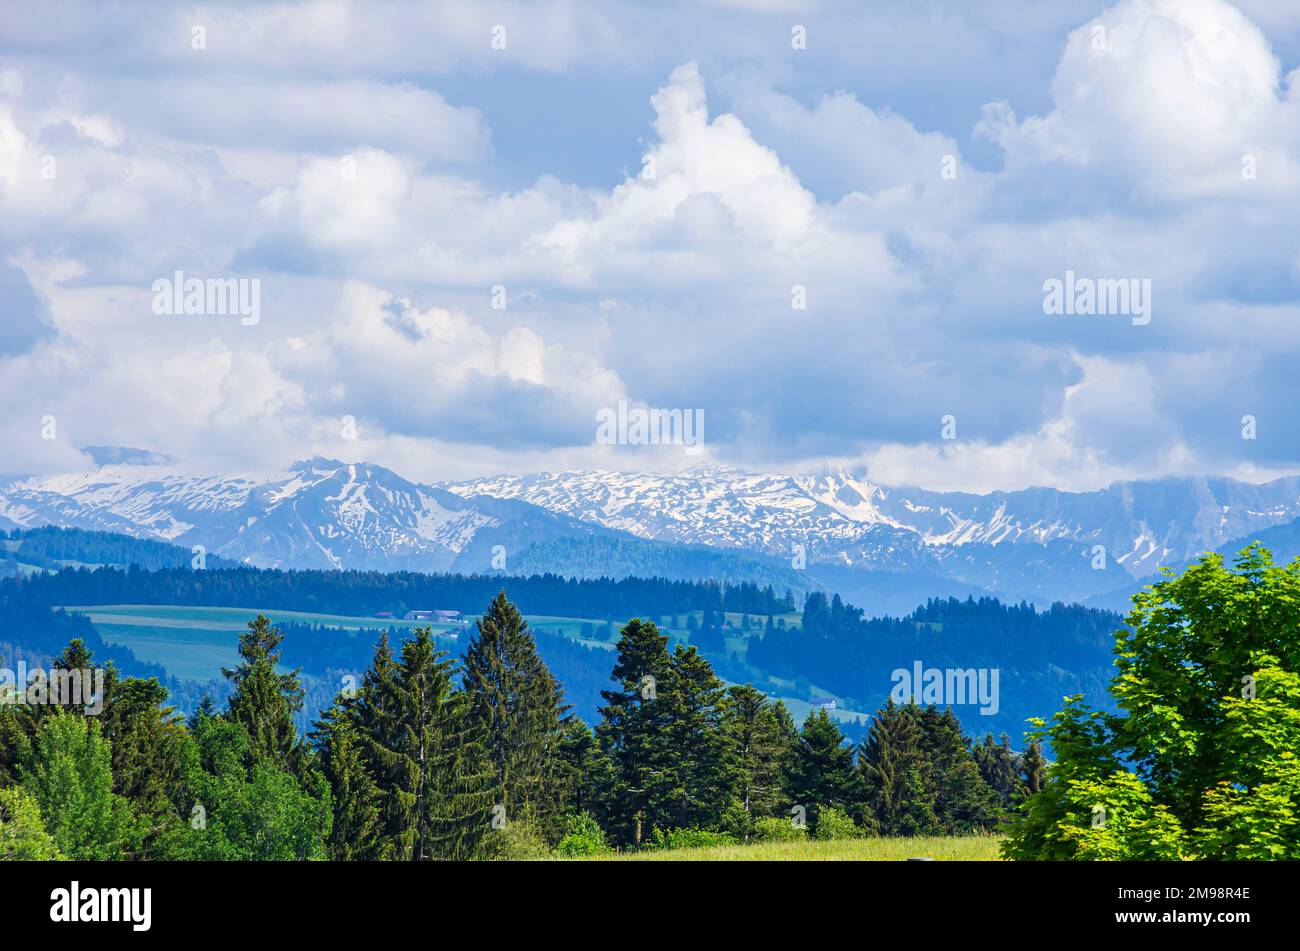 Picturesque scenery and rural area in the Western Allgaeu around the municipality of Scheidegg near Lindau, Bavaria, Germany. Stock Photo